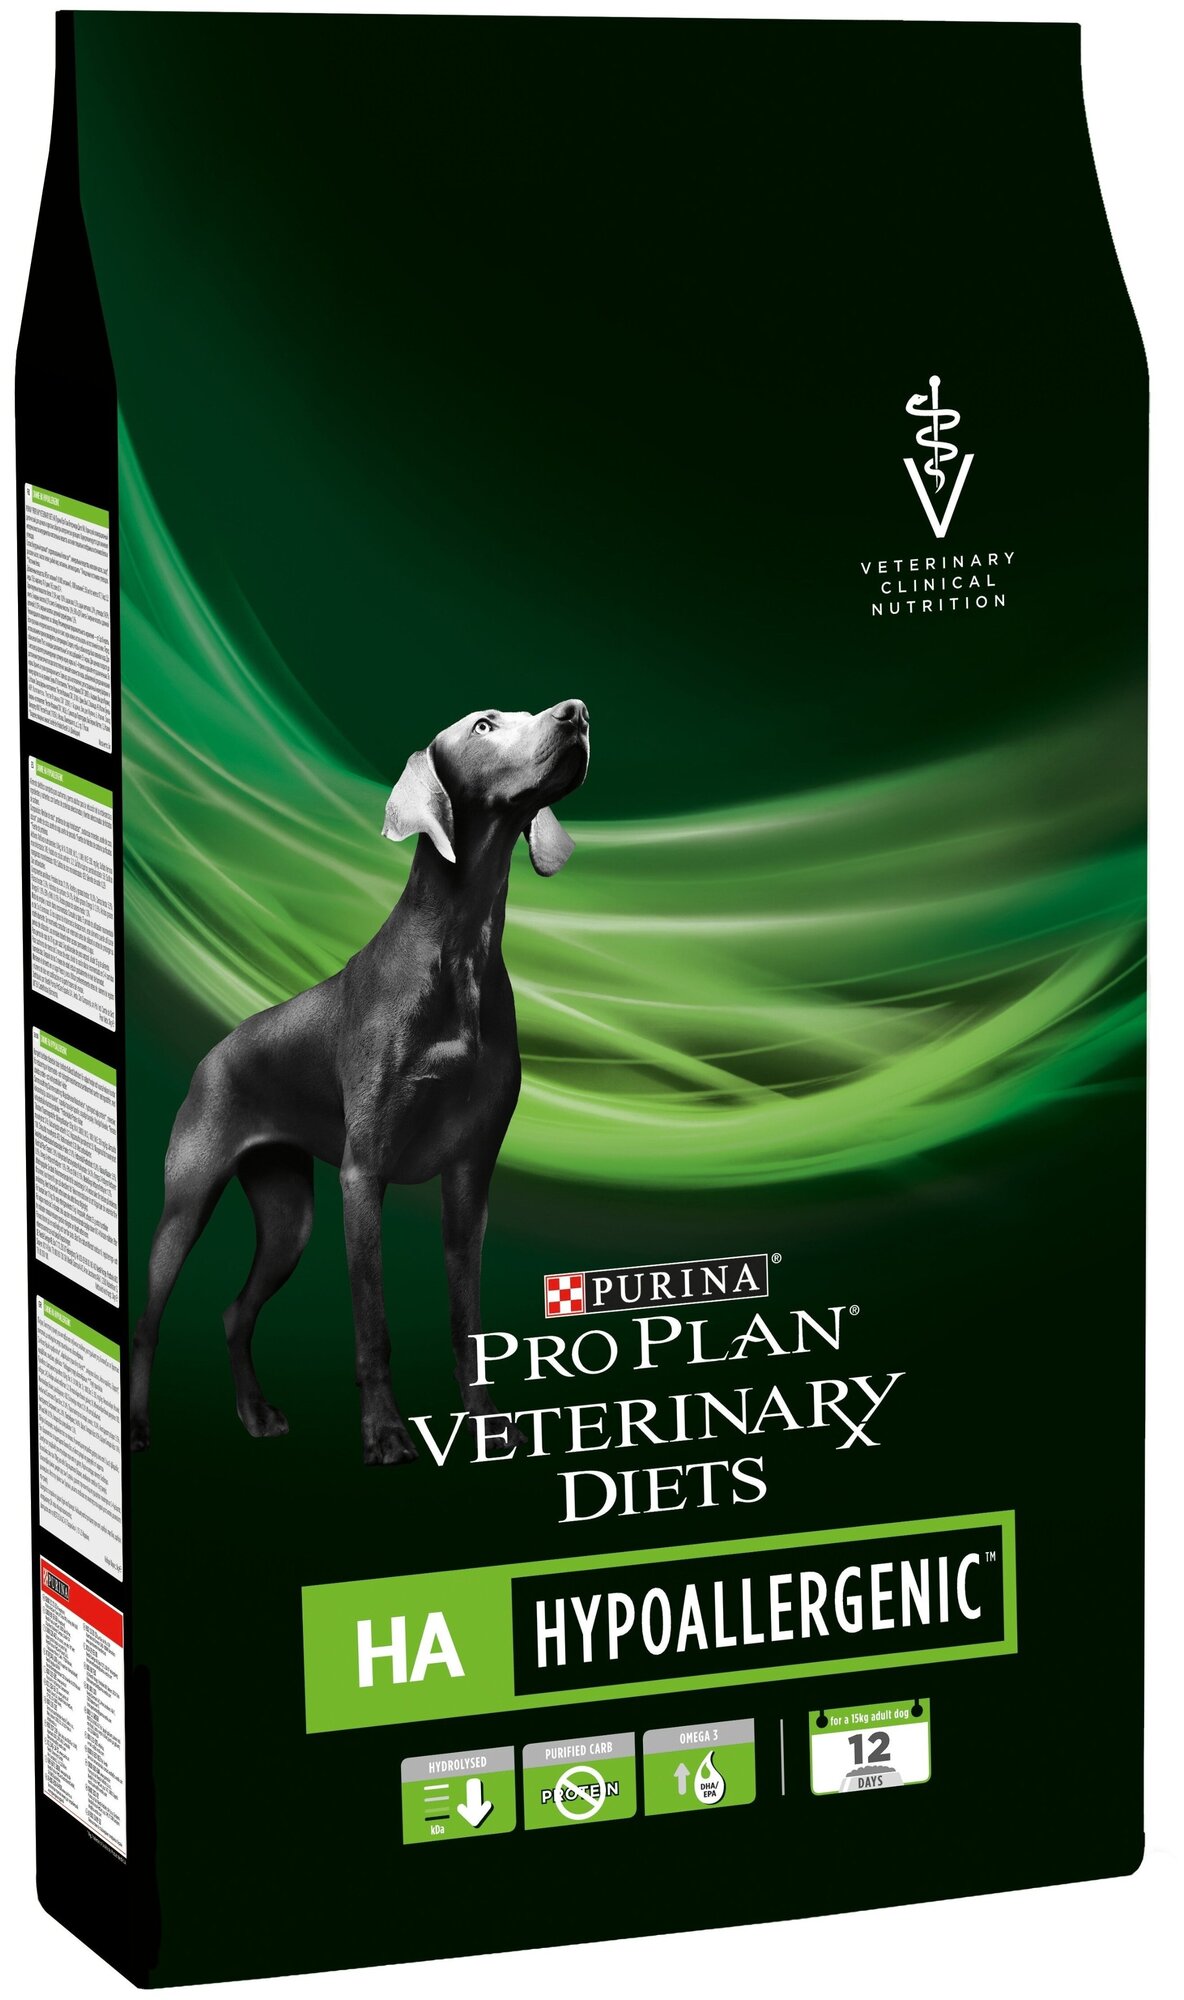 Pro Plan Veterinary Diets HA Hypoallergenic корм для собак профилактика аллергии (Диетический, 1,3 кг.) Purina Pro Plan Veterinary Diets - фото №1